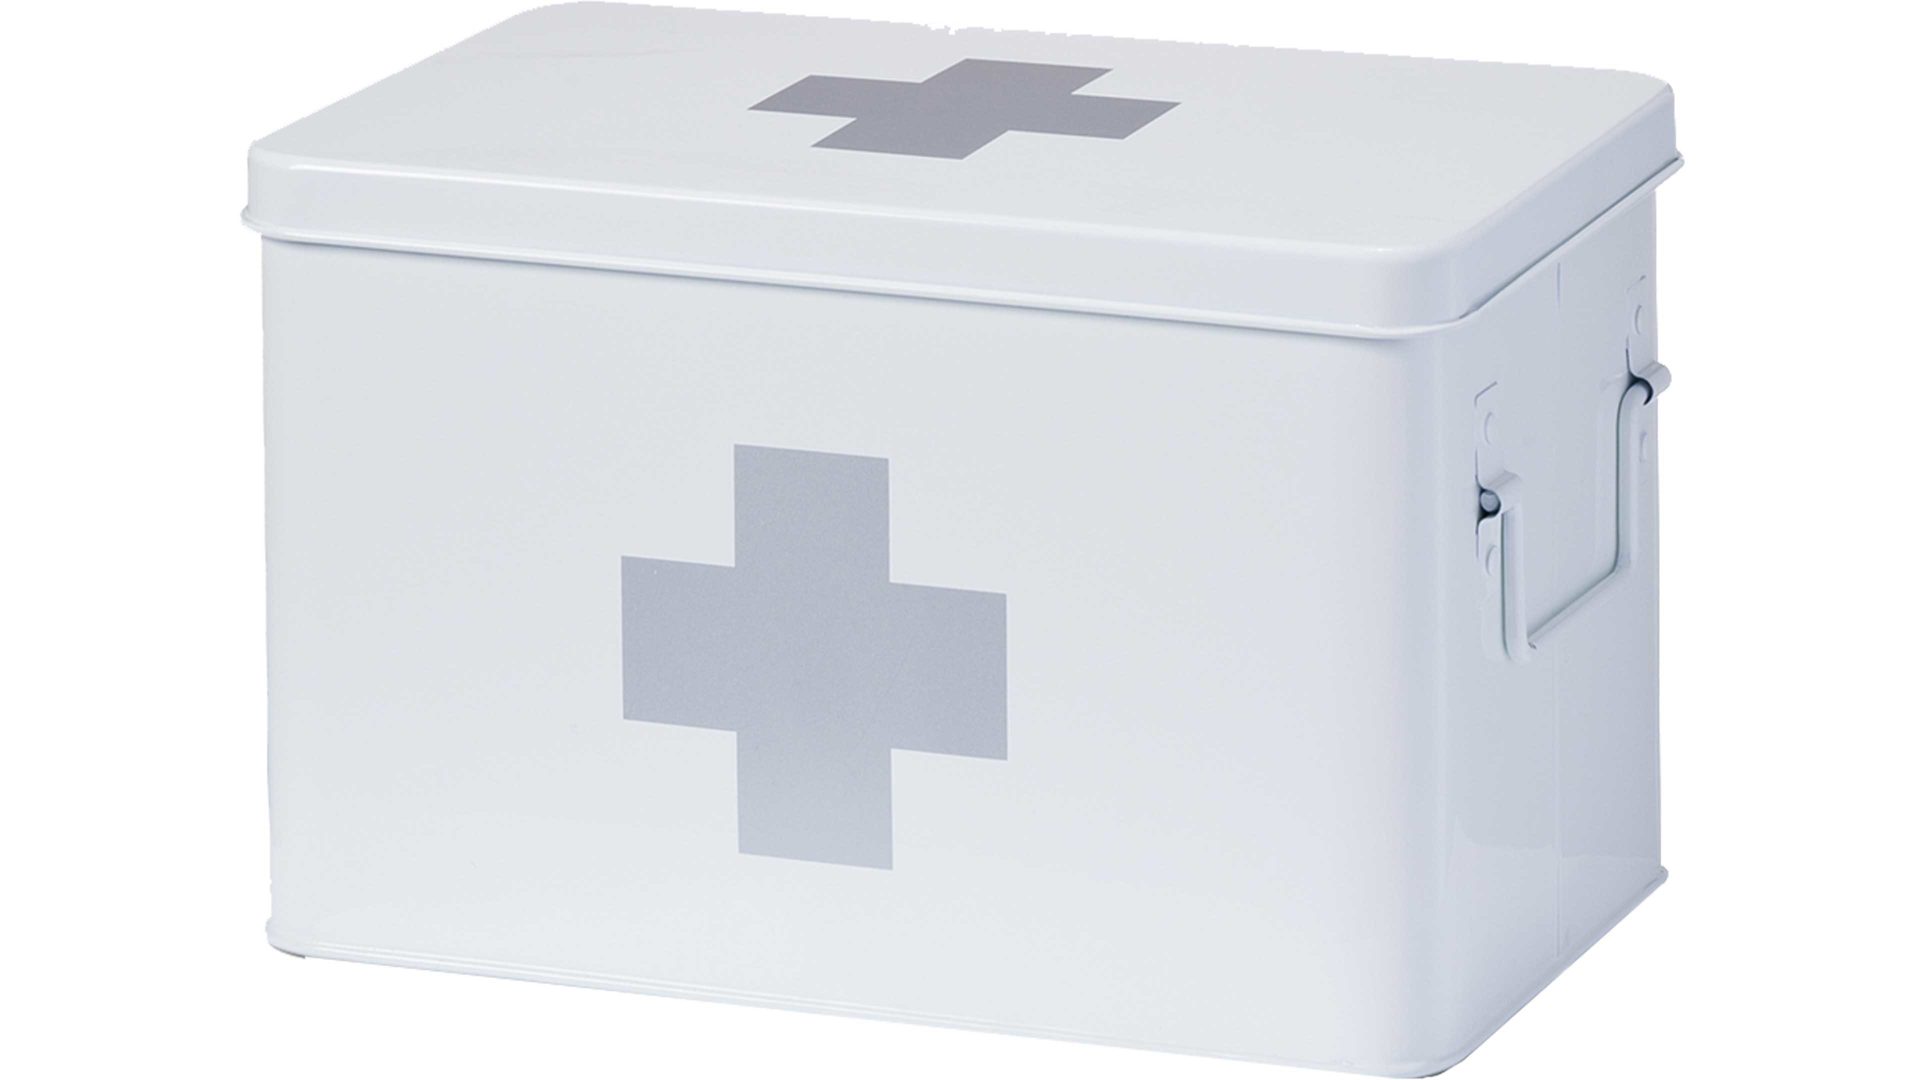 Ordnungsbox Zeller present aus Metall in Weiß Metall-Medizinbox weißes Metall - ca. 20 x 20 cm